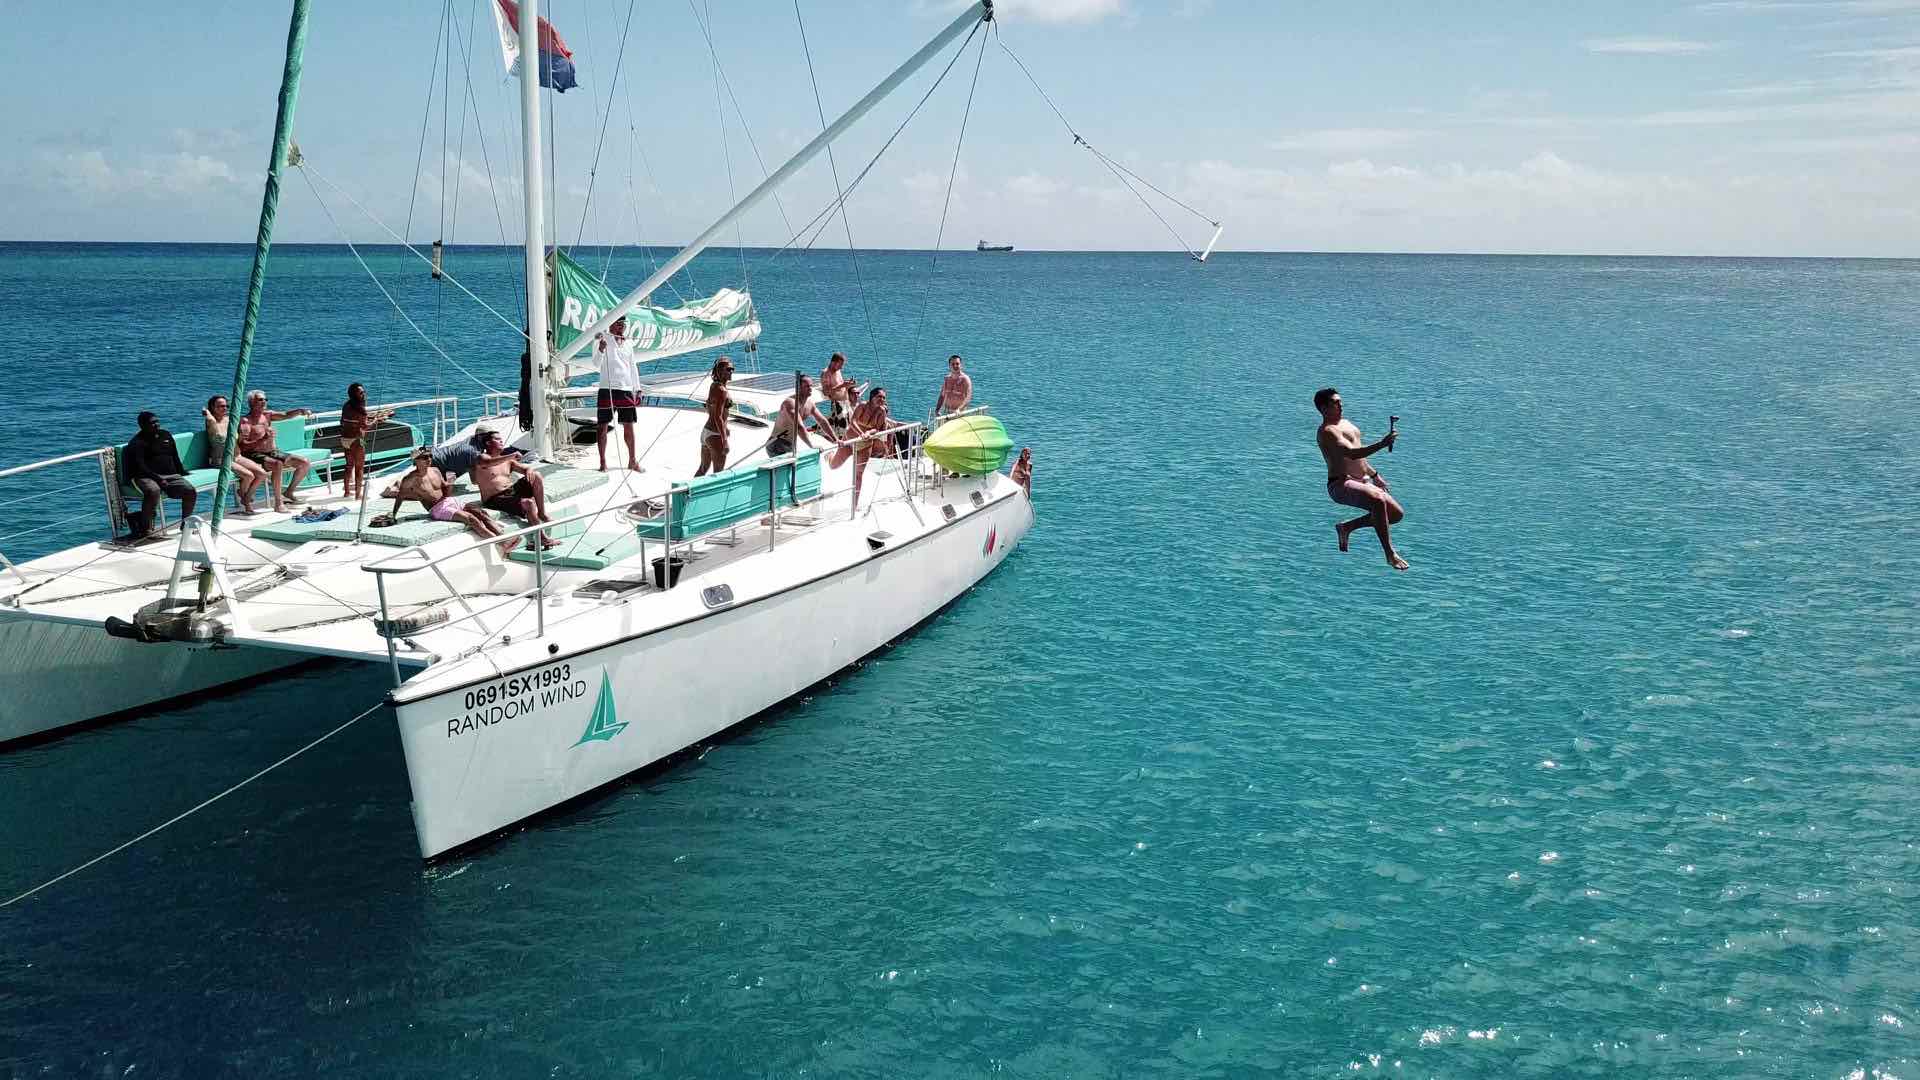 The Tarzan swing with many jumping in water aboard Random Wind Charters yacht